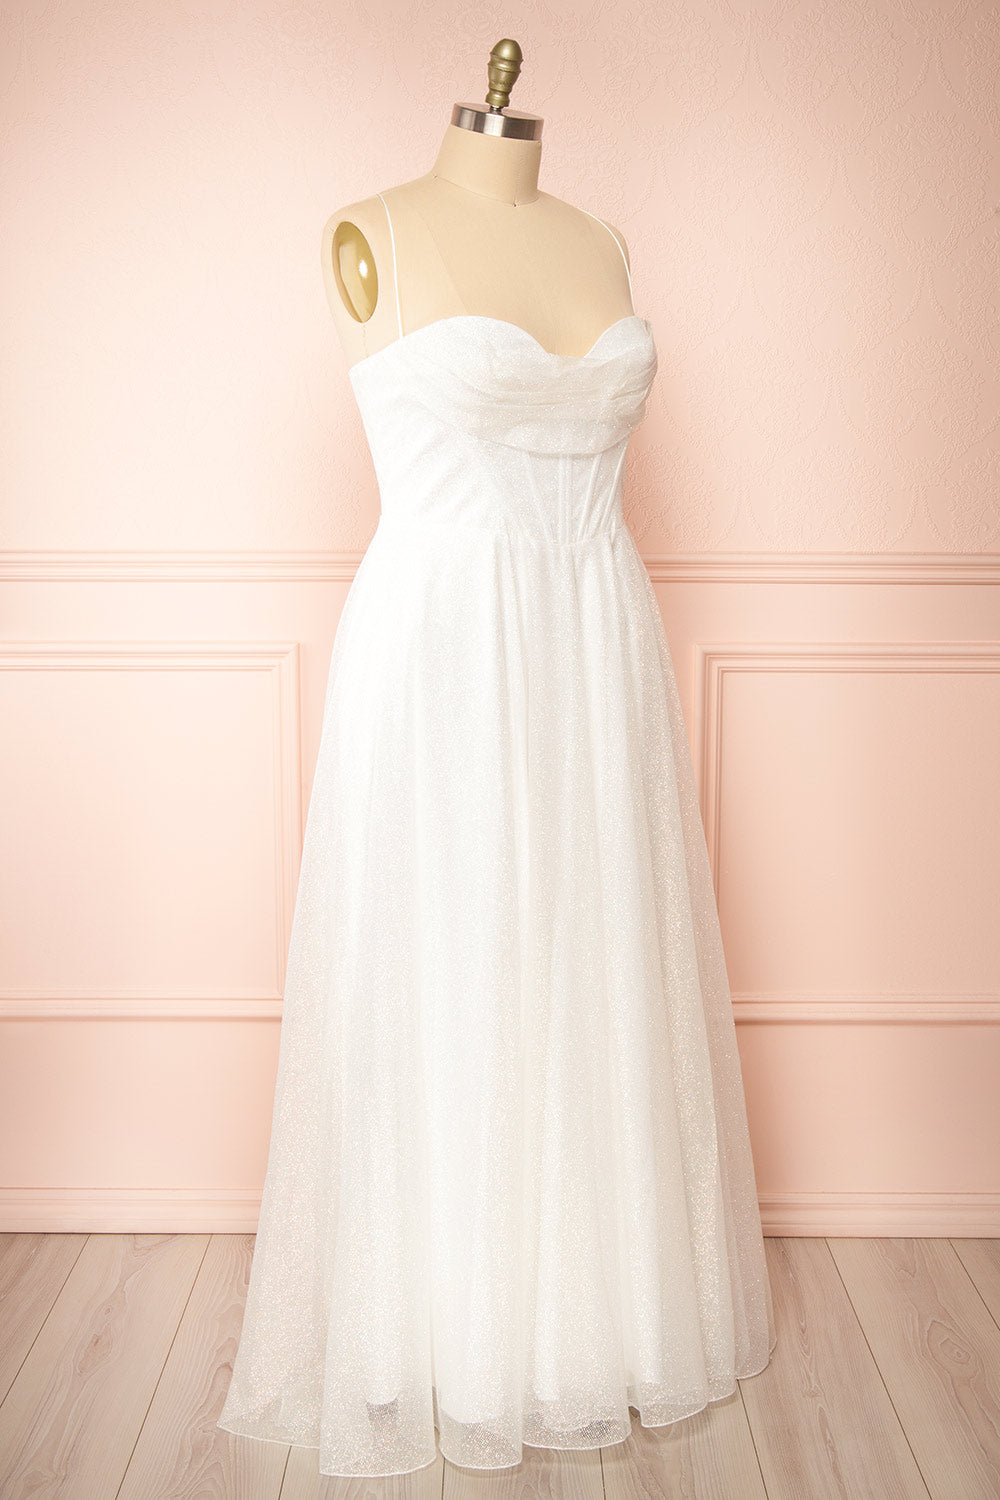 Genevieve Sparkly Cowl Neck Bridal Dress